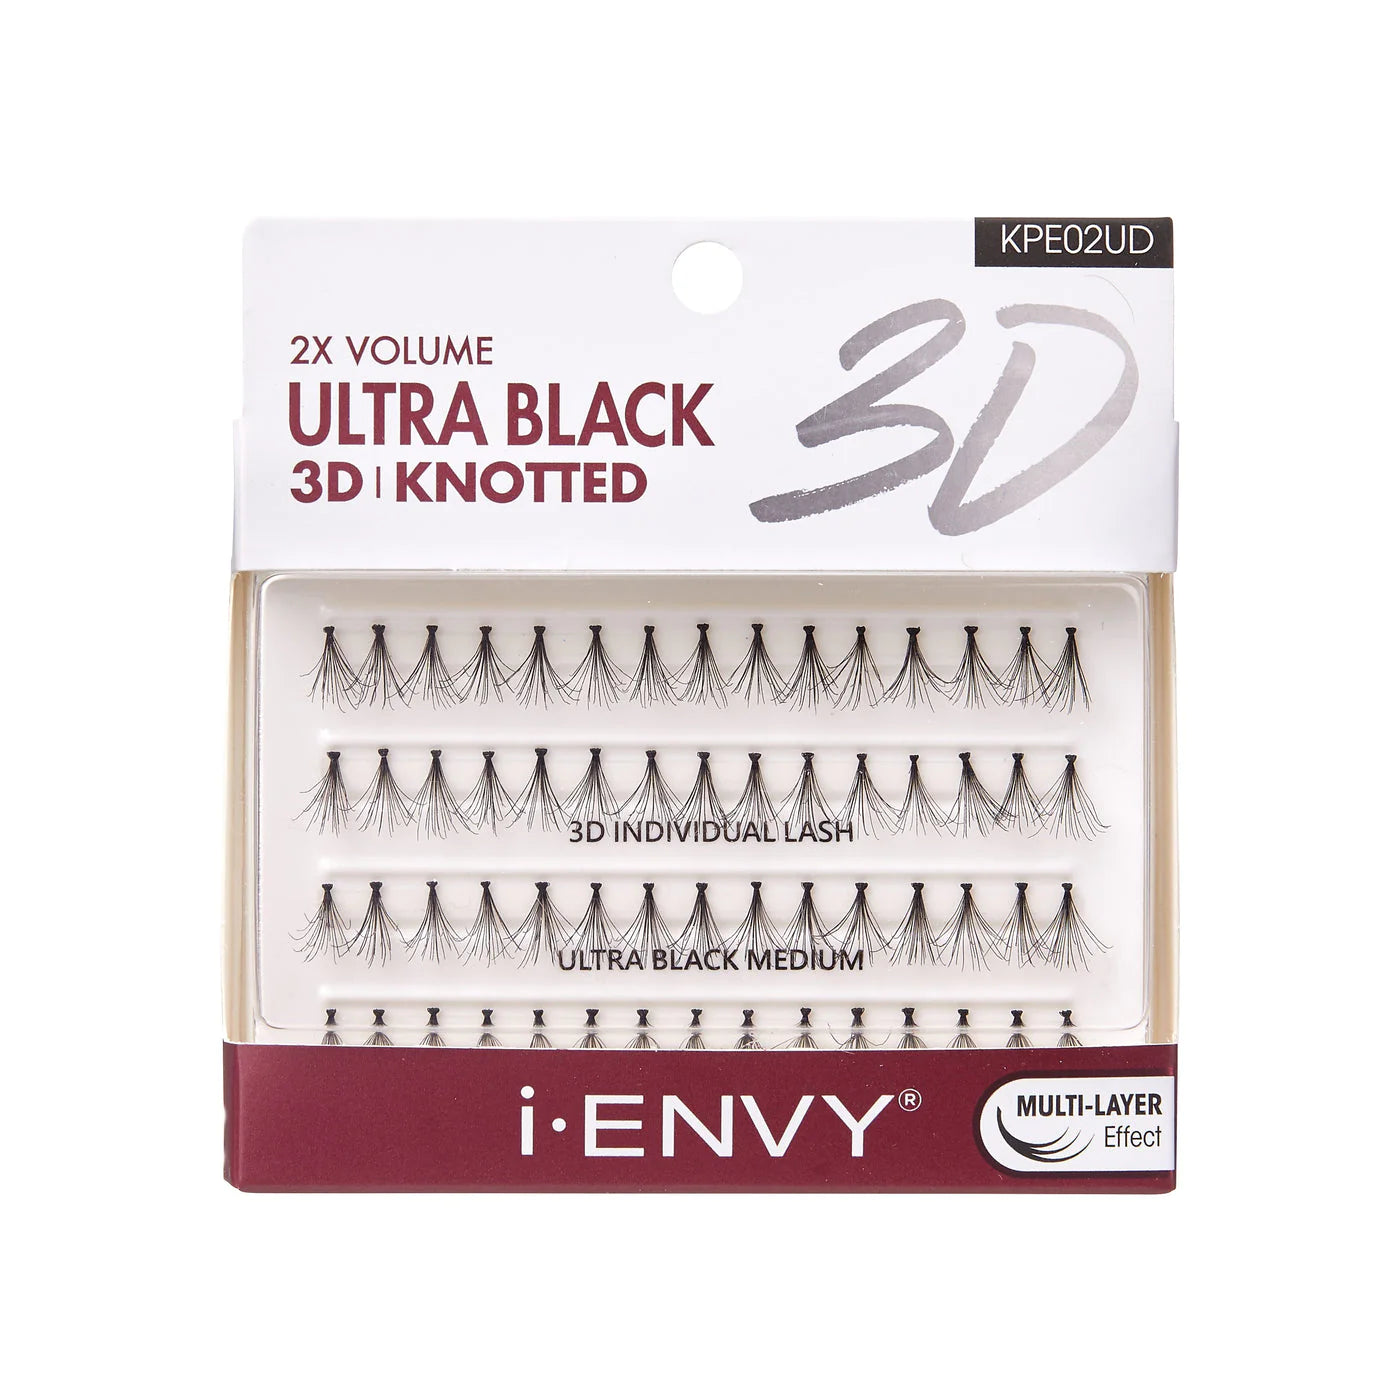 i-Envy 2X Volume Ultra Black 3D Knotted Medium KPE02UD